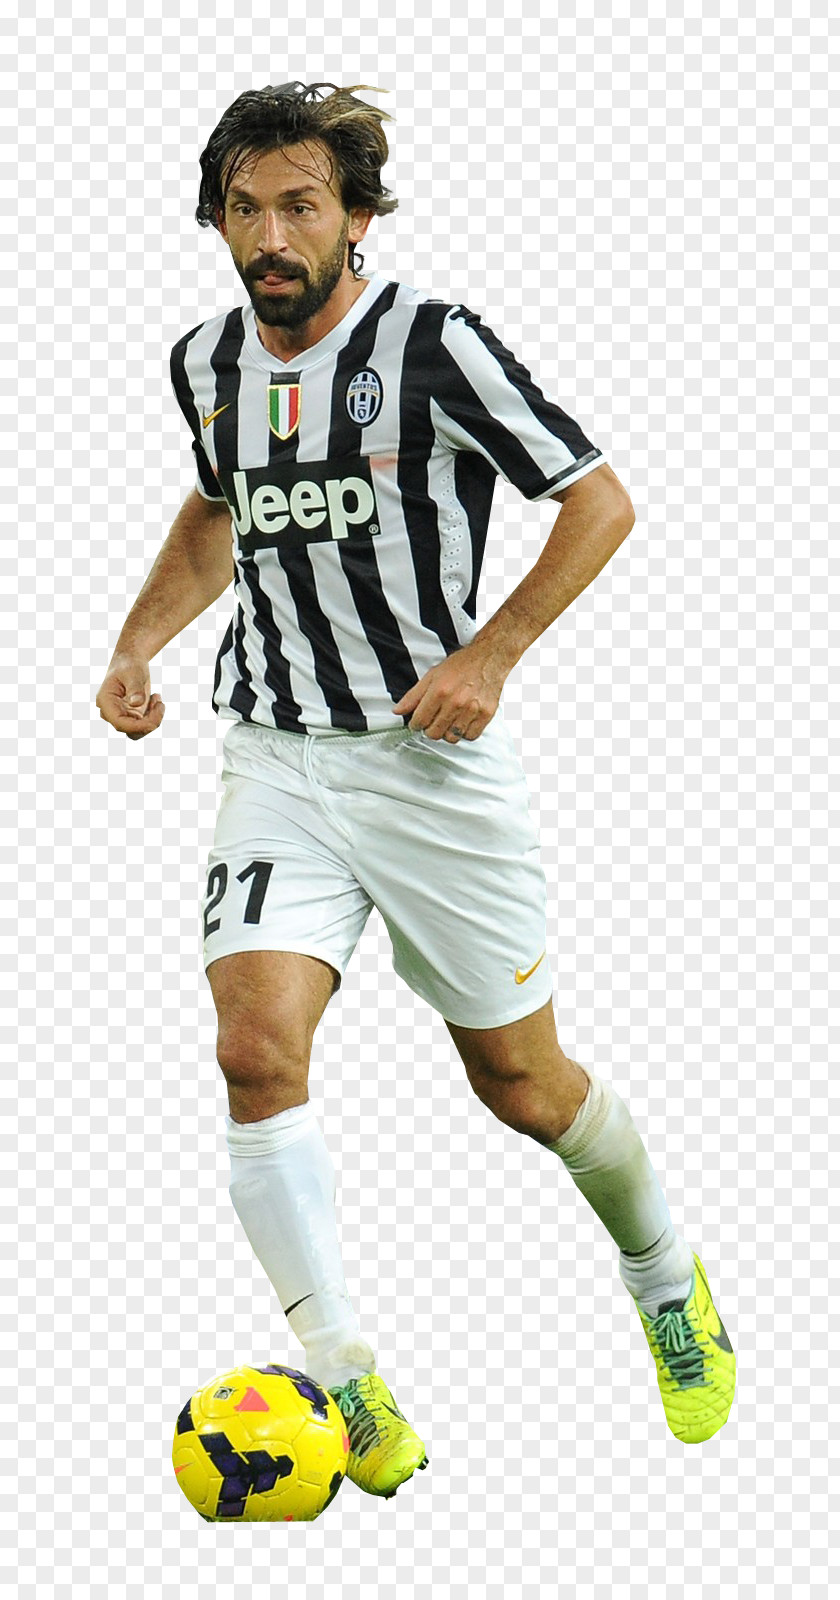 Andrea Pirlo Paul Pogba Football Player Juventus F.C. Sport PNG